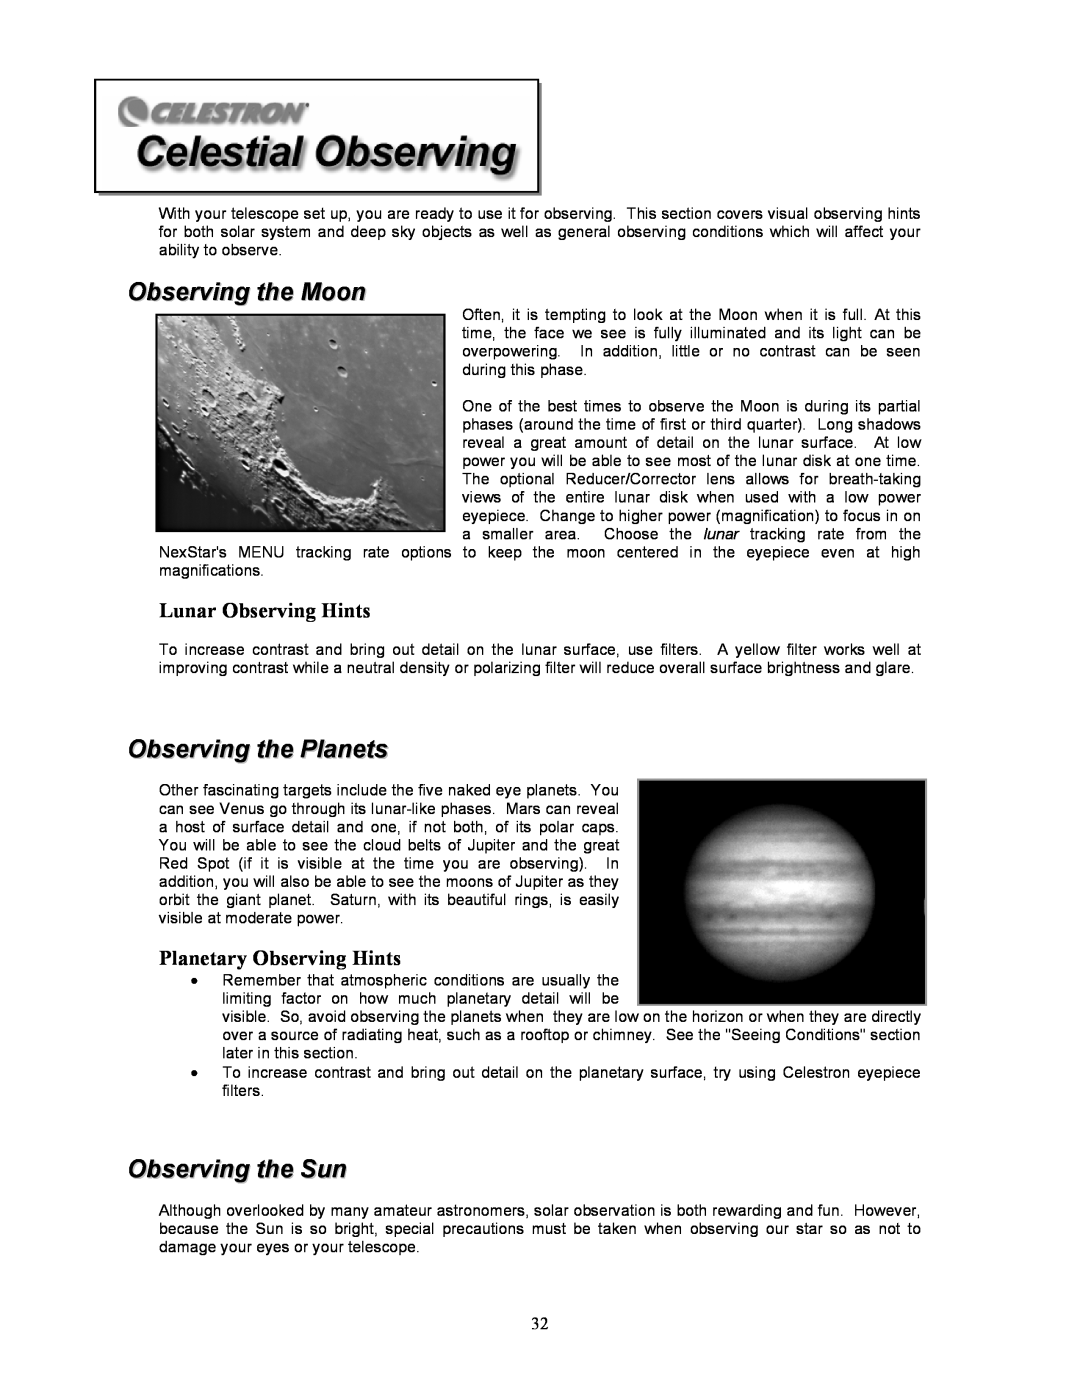 Celestron 8i manual Observing the Moon, Observing the Planets, Observing the Sun, Lunar Observing Hints 